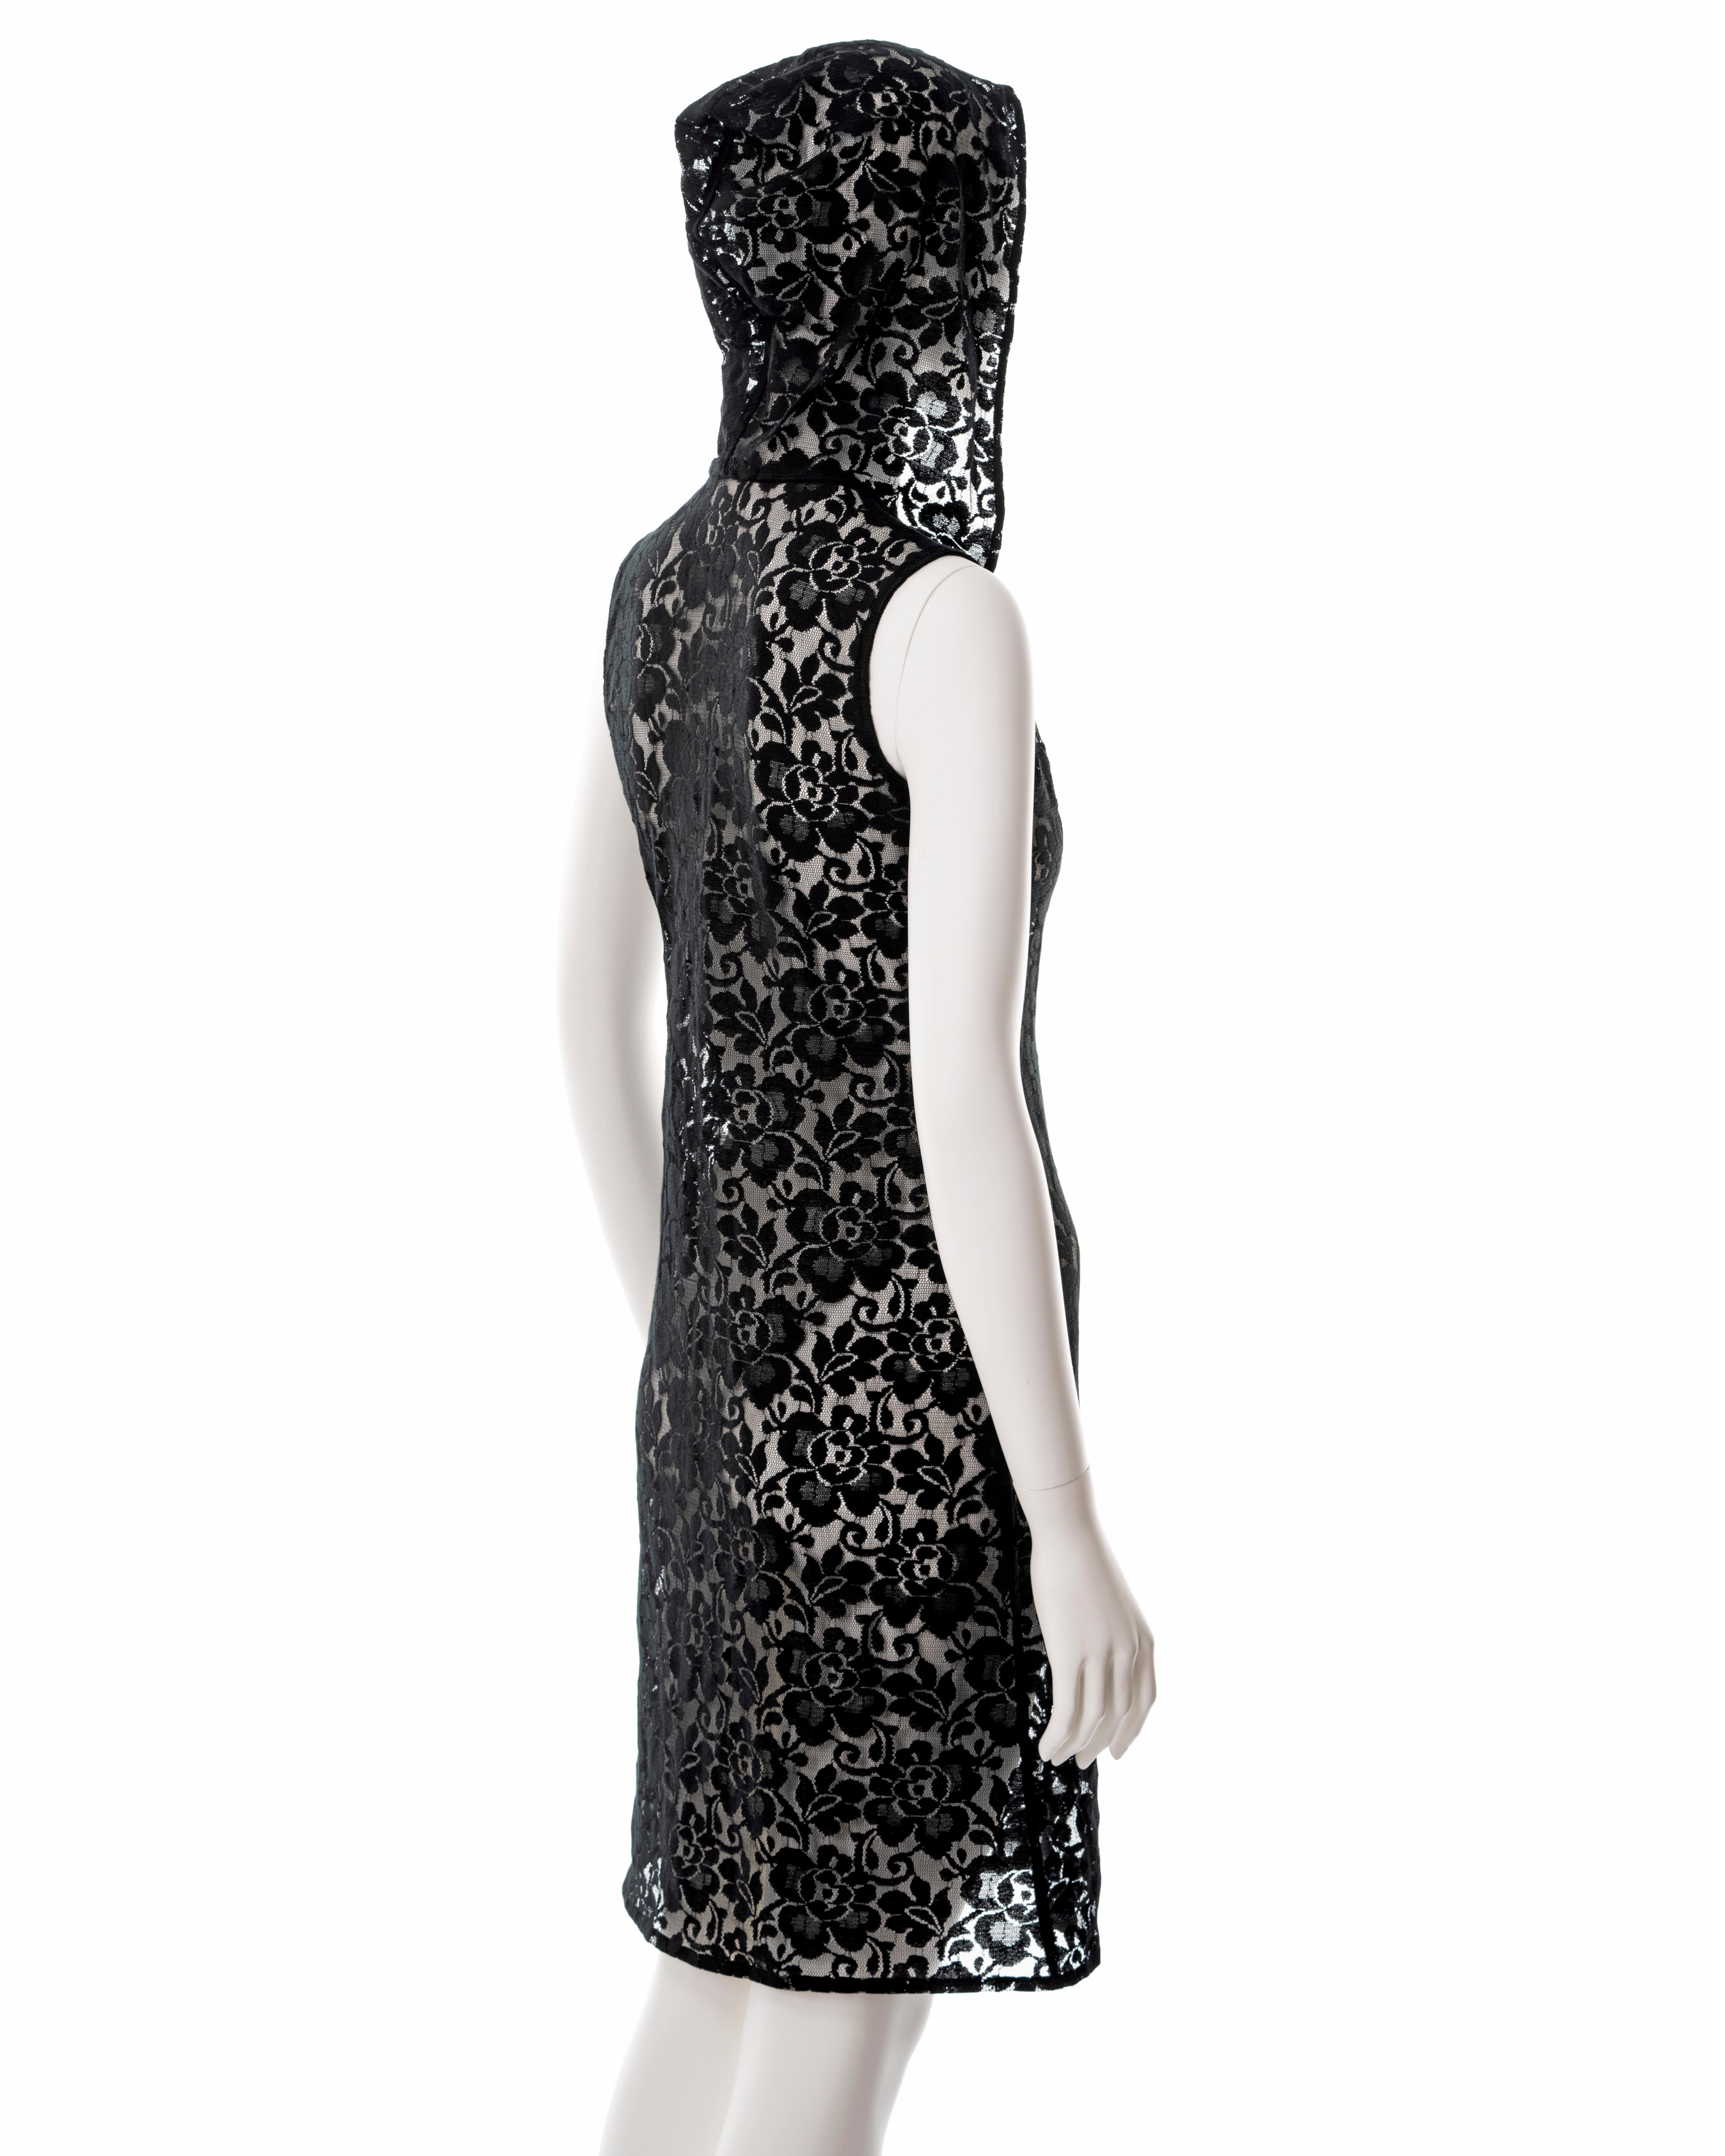 Helmut Lang black lace hooded shift dress, ss 1996 For Sale 4